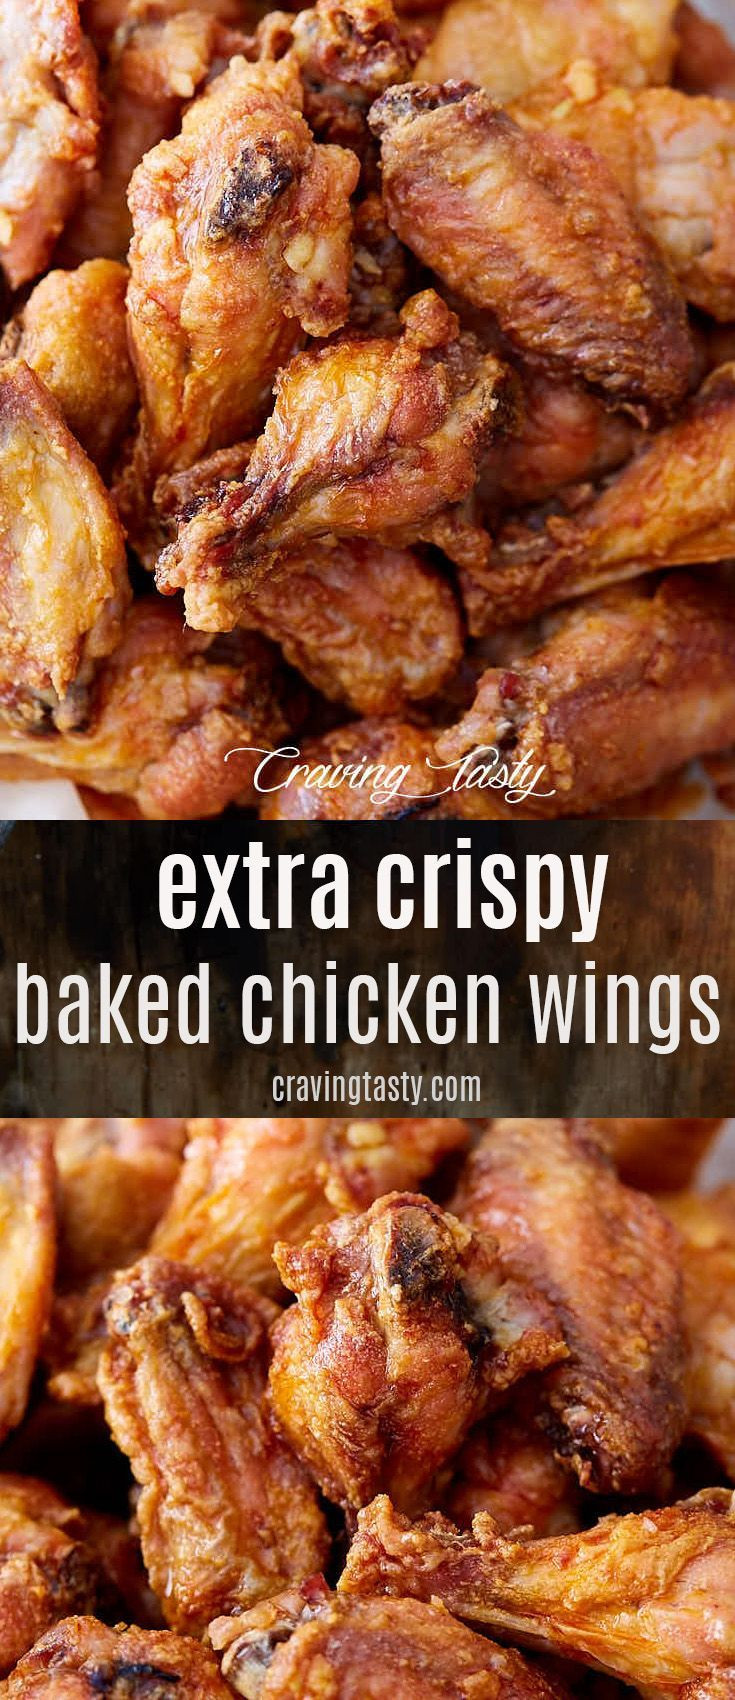 Crispy Chicken Wings Baking Powder Lovely Super Crispy Baked Chicken Wings the Secret is to Use